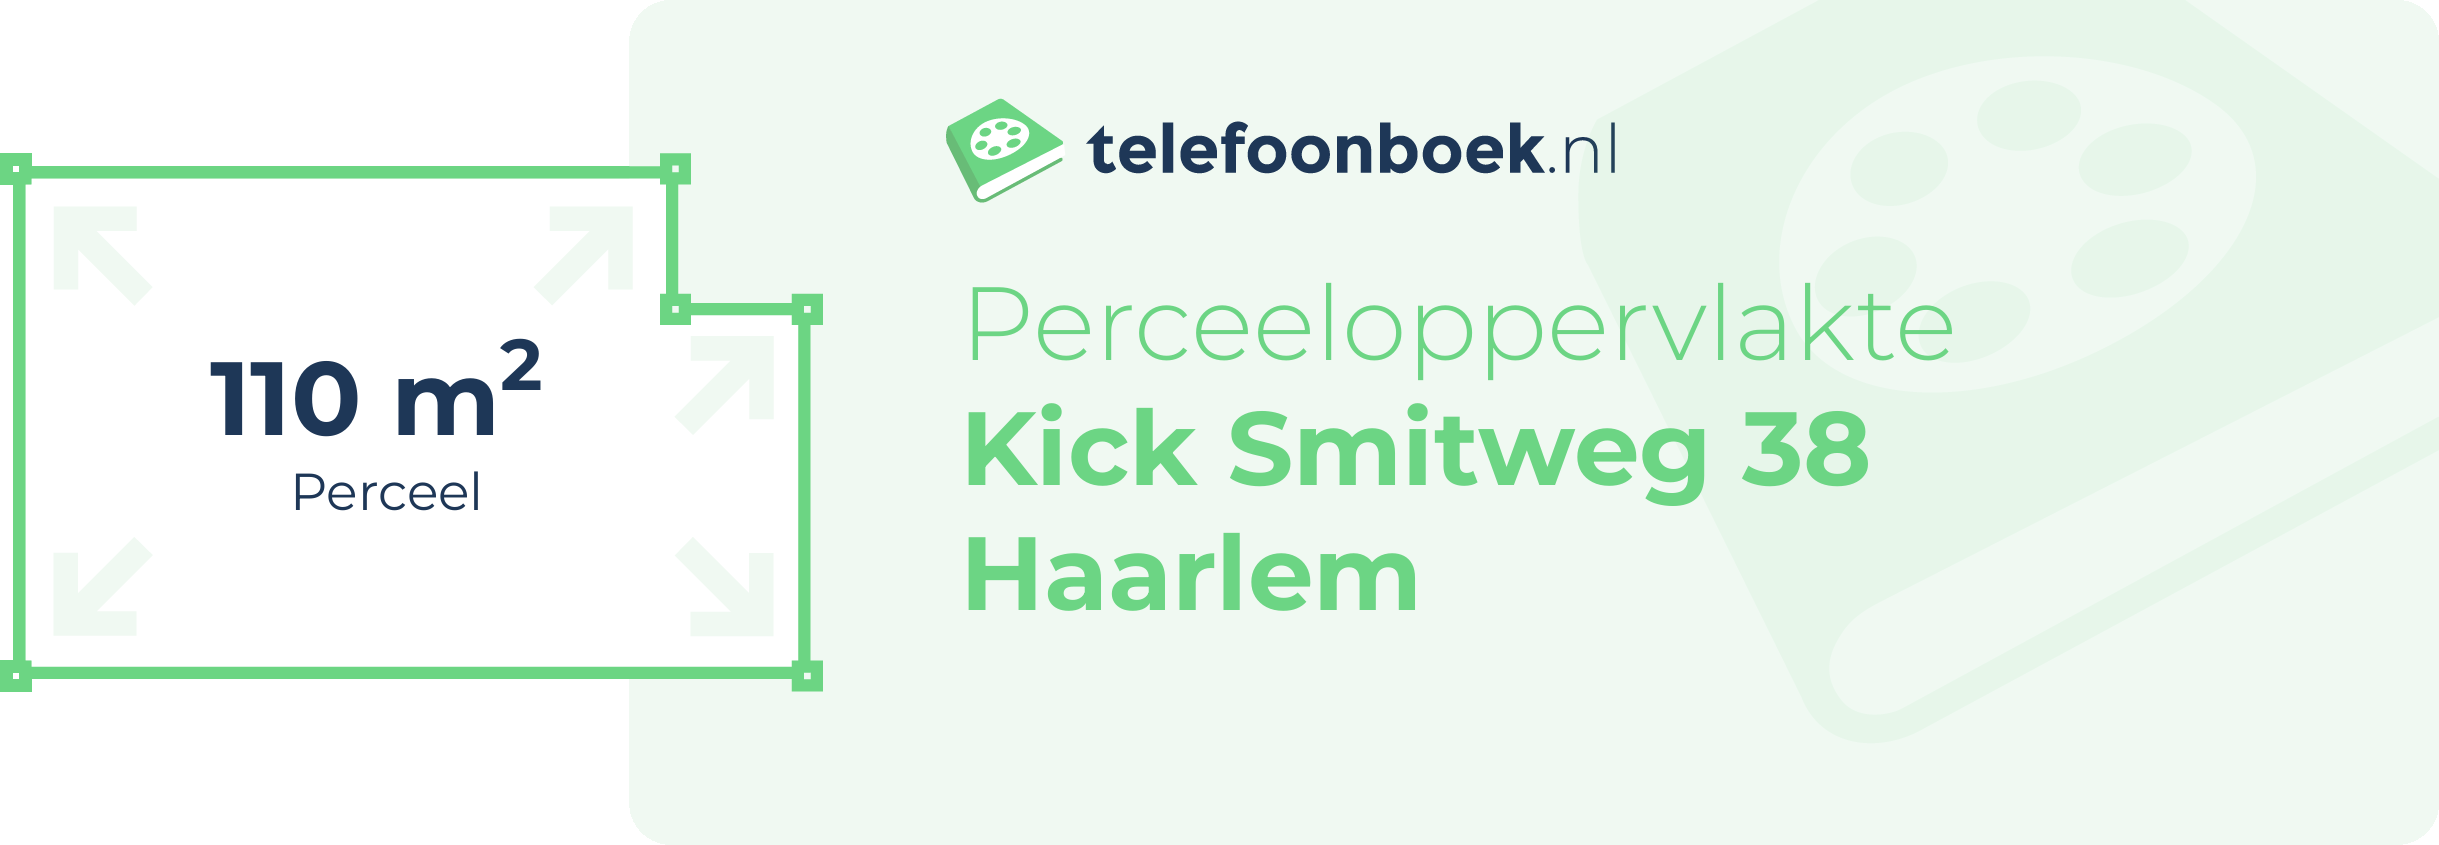 Perceeloppervlakte Kick Smitweg 38 Haarlem